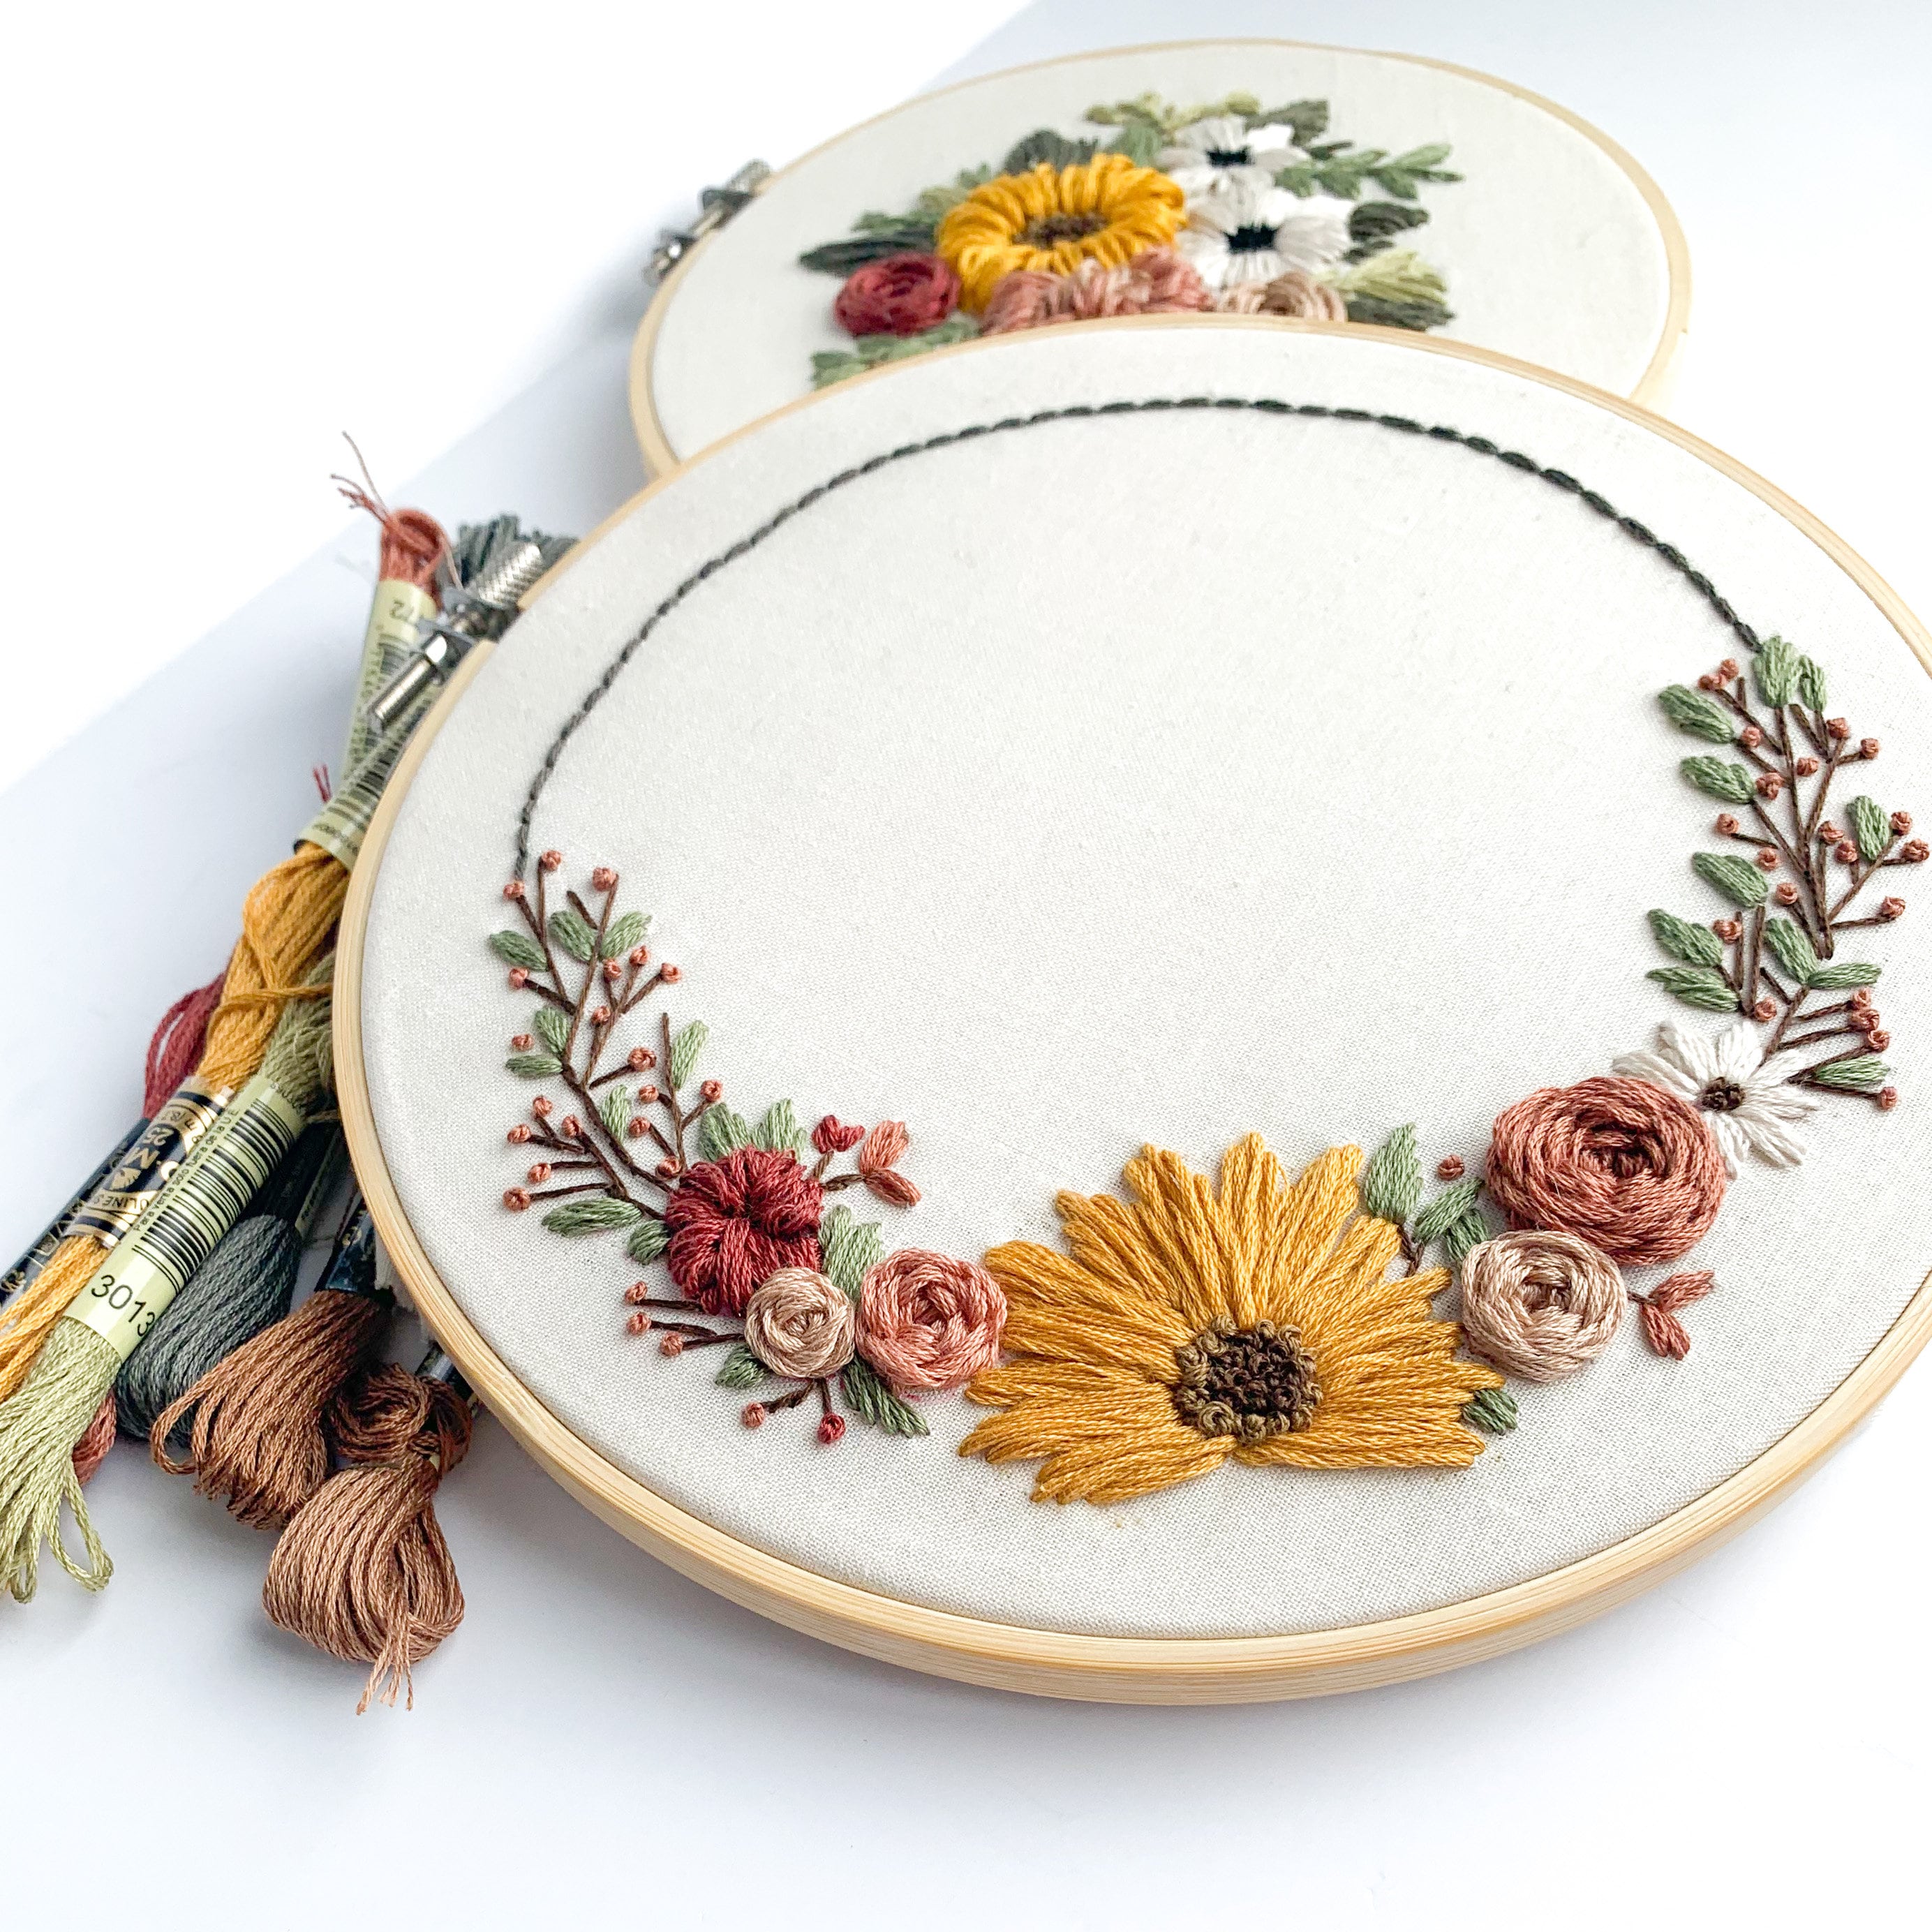 PDF Sunflower Wreath Hoop Floral Pattern, Embroidery Pattern